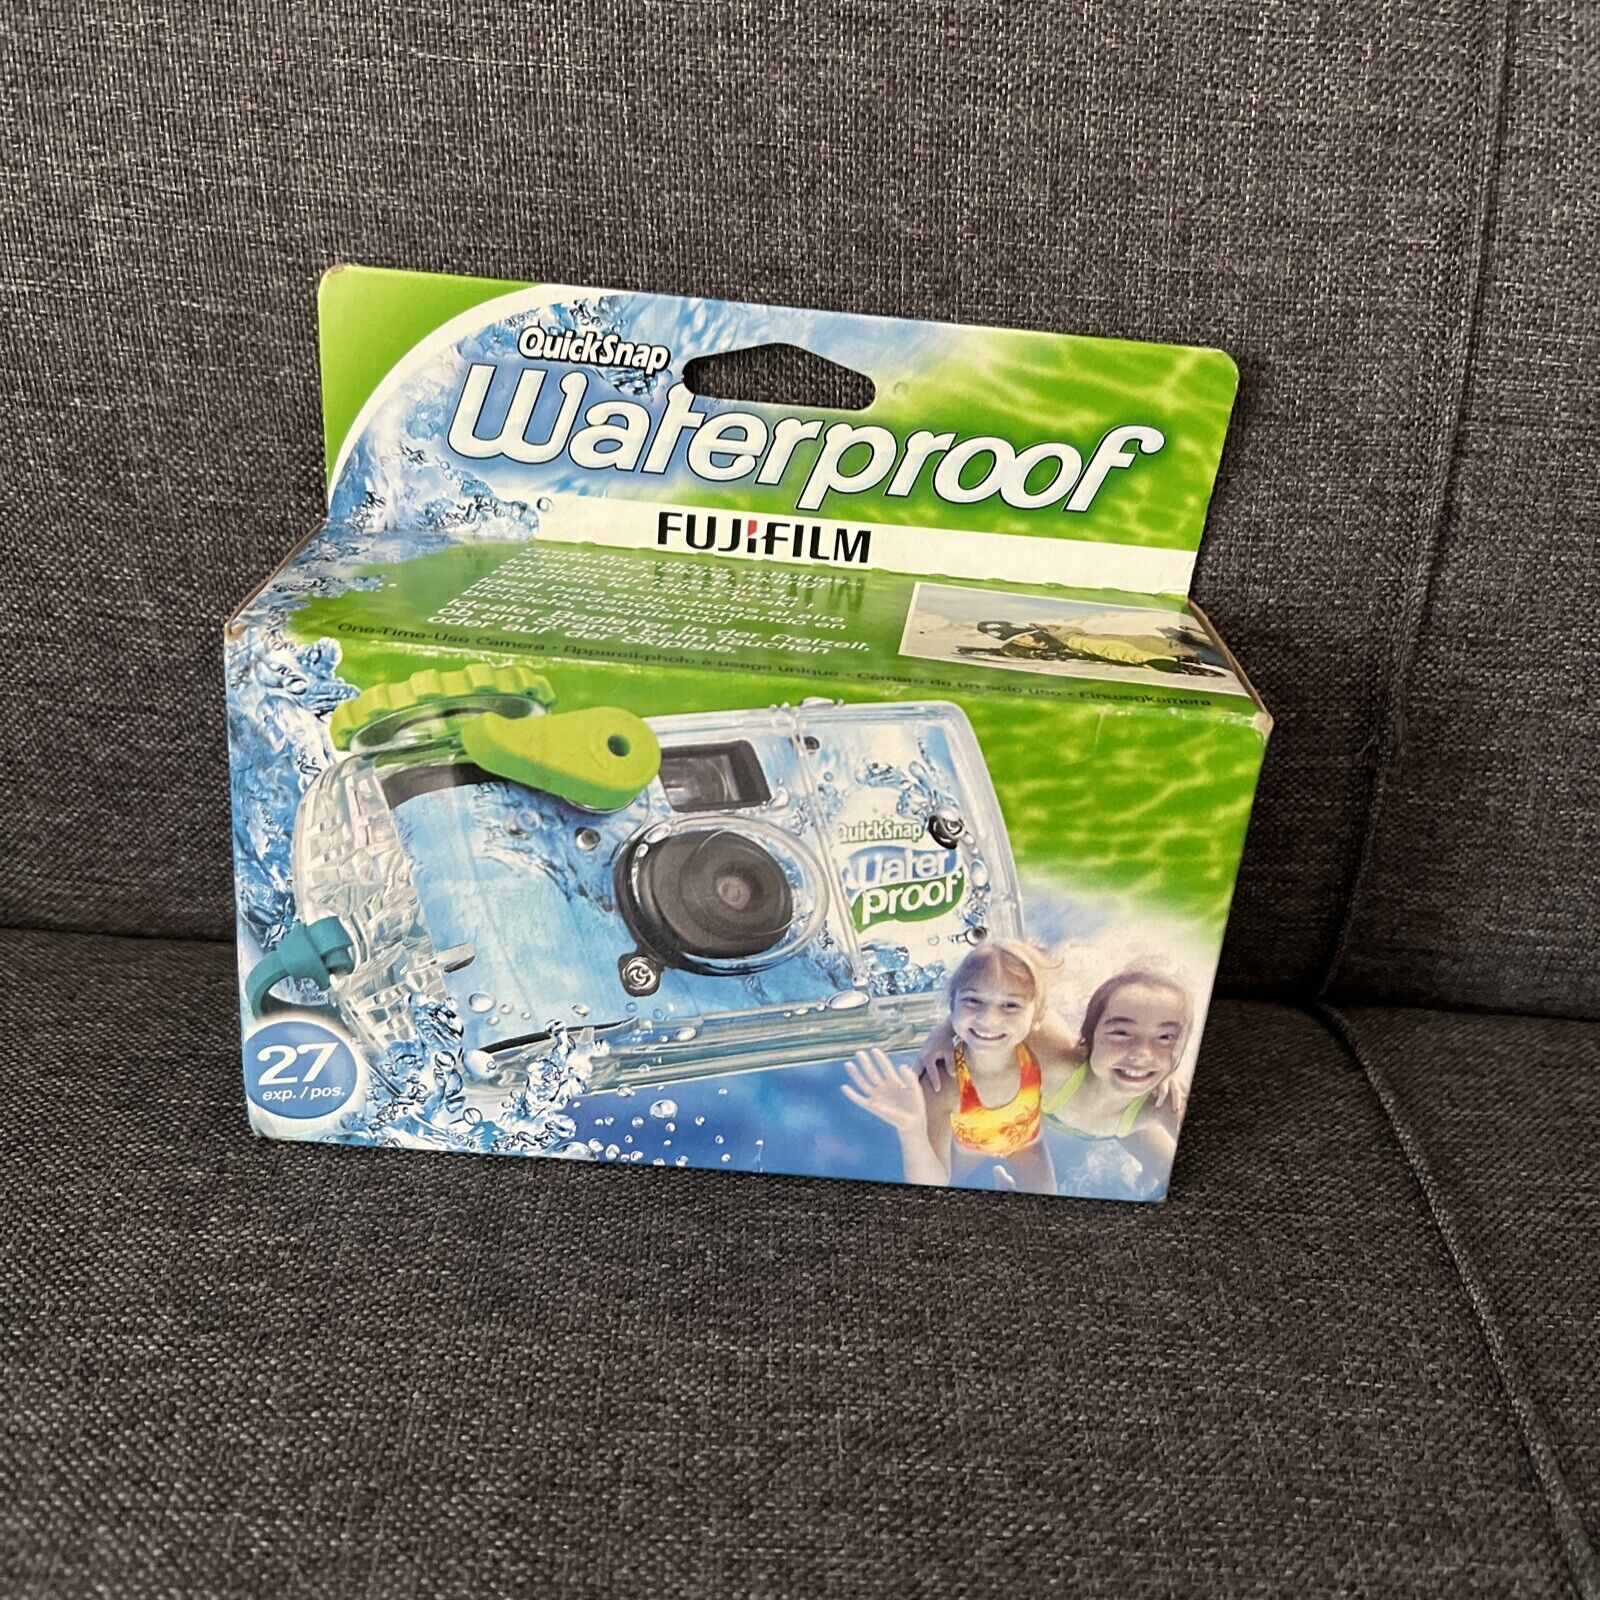 Fujifilm Disposable Cameras Quick Snap Waterproof Pool Underwater 35 Mm